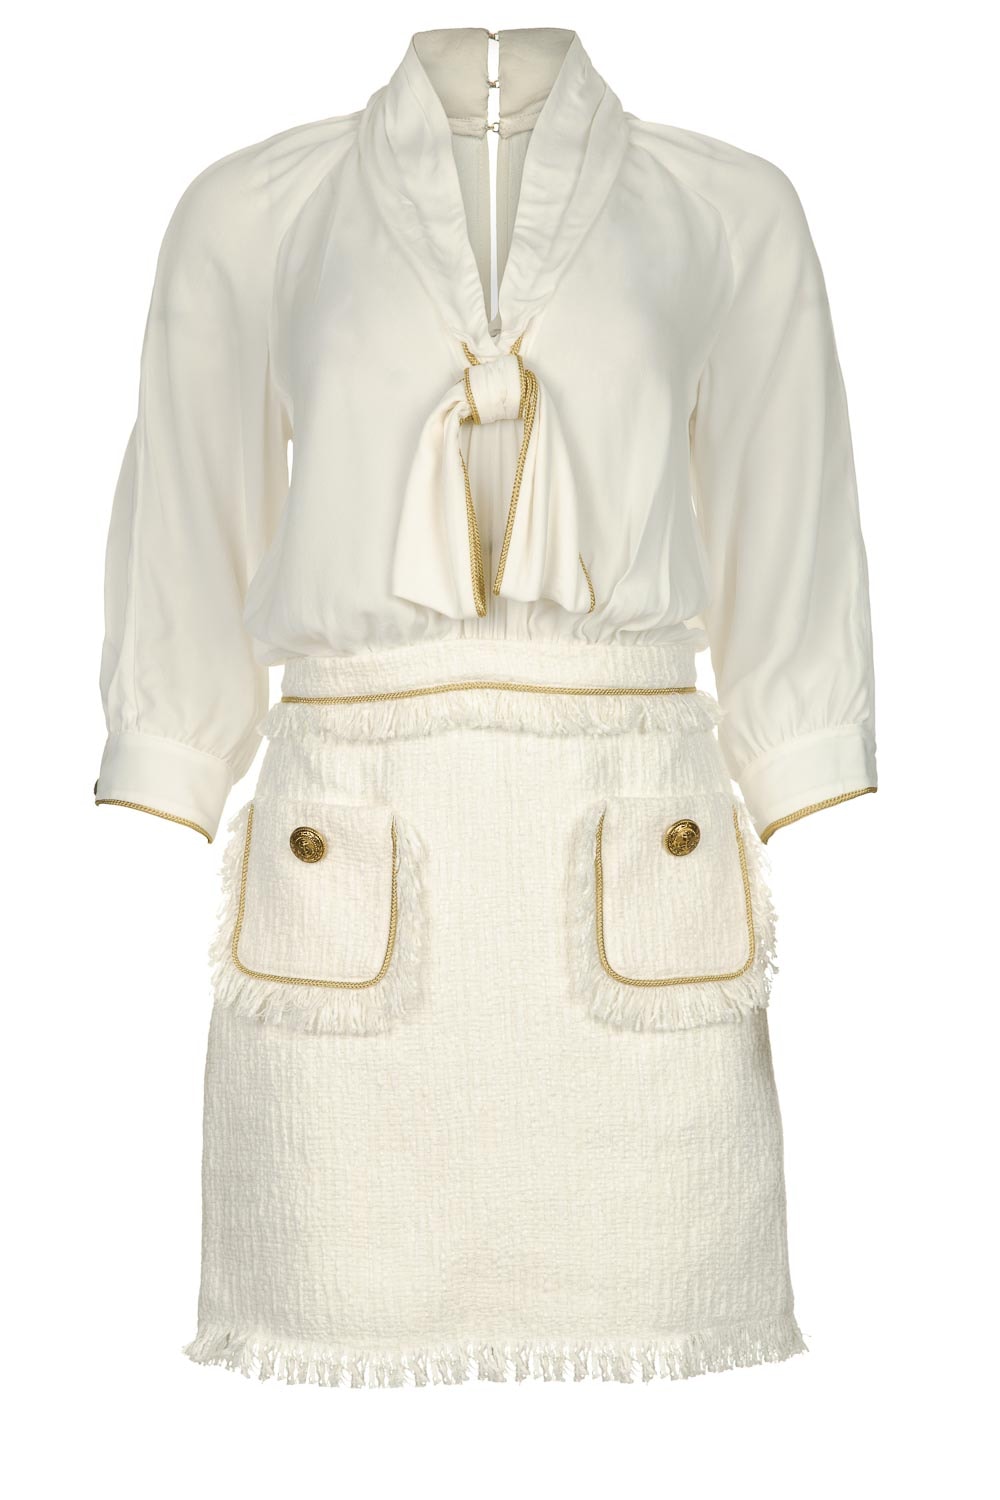 ontploffing interval Gemakkelijk Jurk met blouse detail Dolce | wit : Dress with blouse detail Do | ELISABETTA  FRANCHI | Little Soho